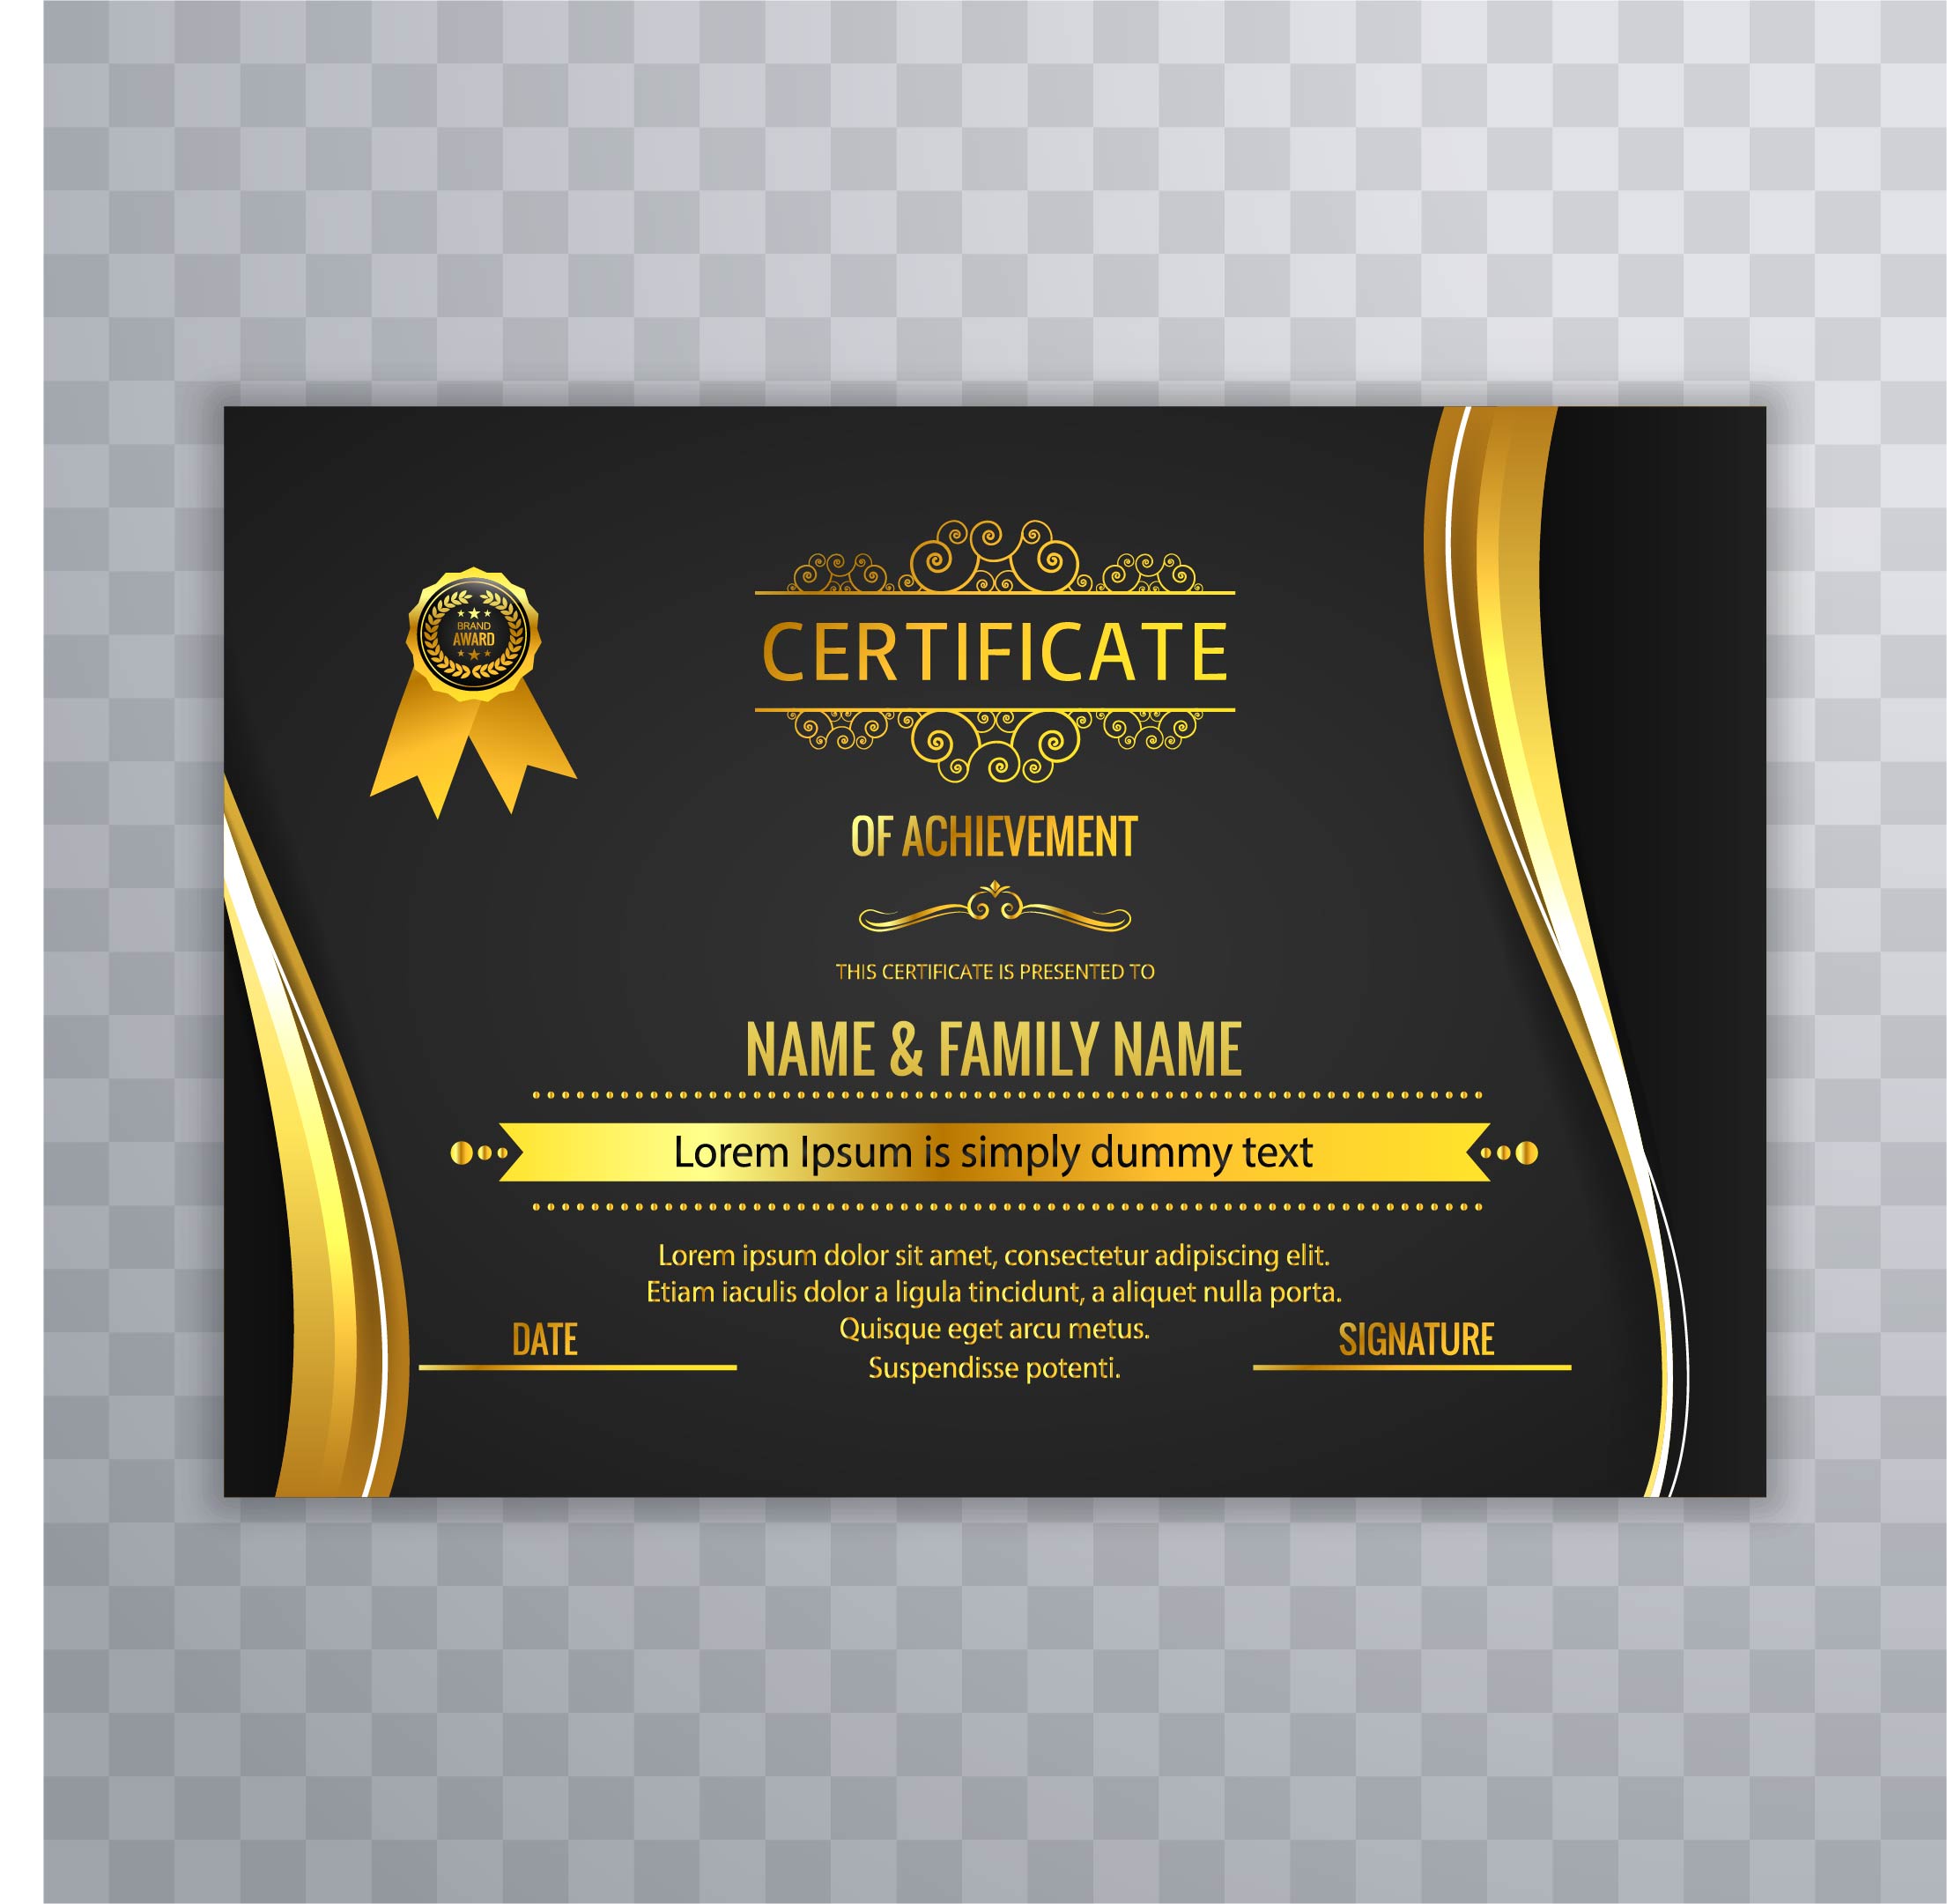 Certificate Design Template Free Download Powenimage